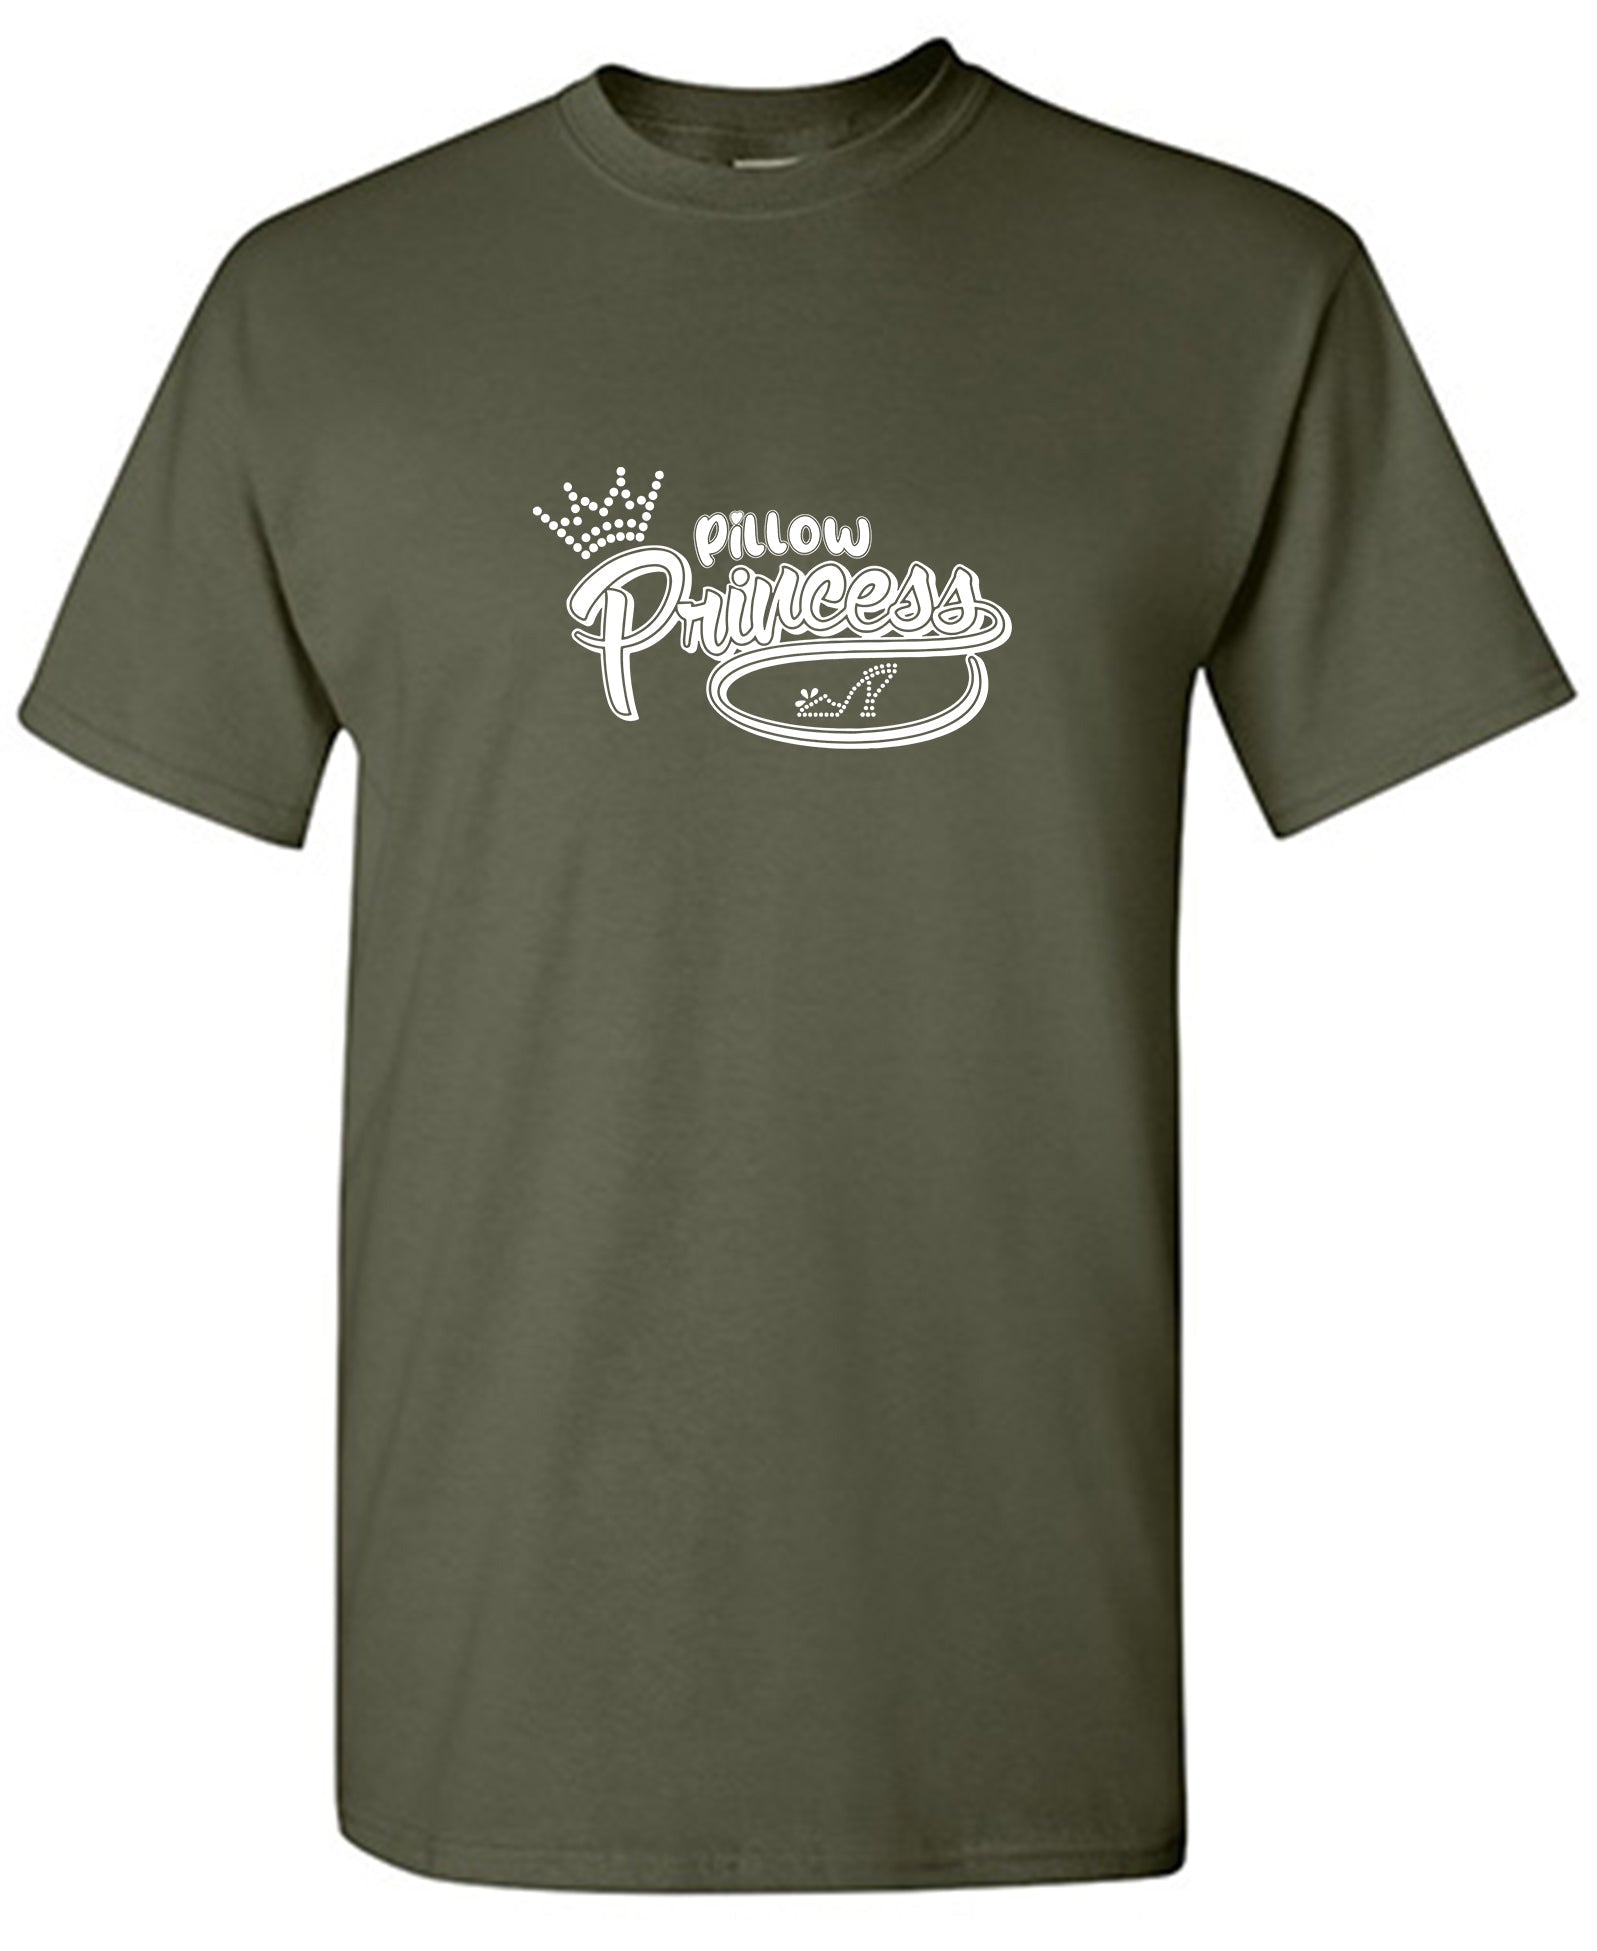 Pillow Princess Tee - Funny Graphic T Shirts